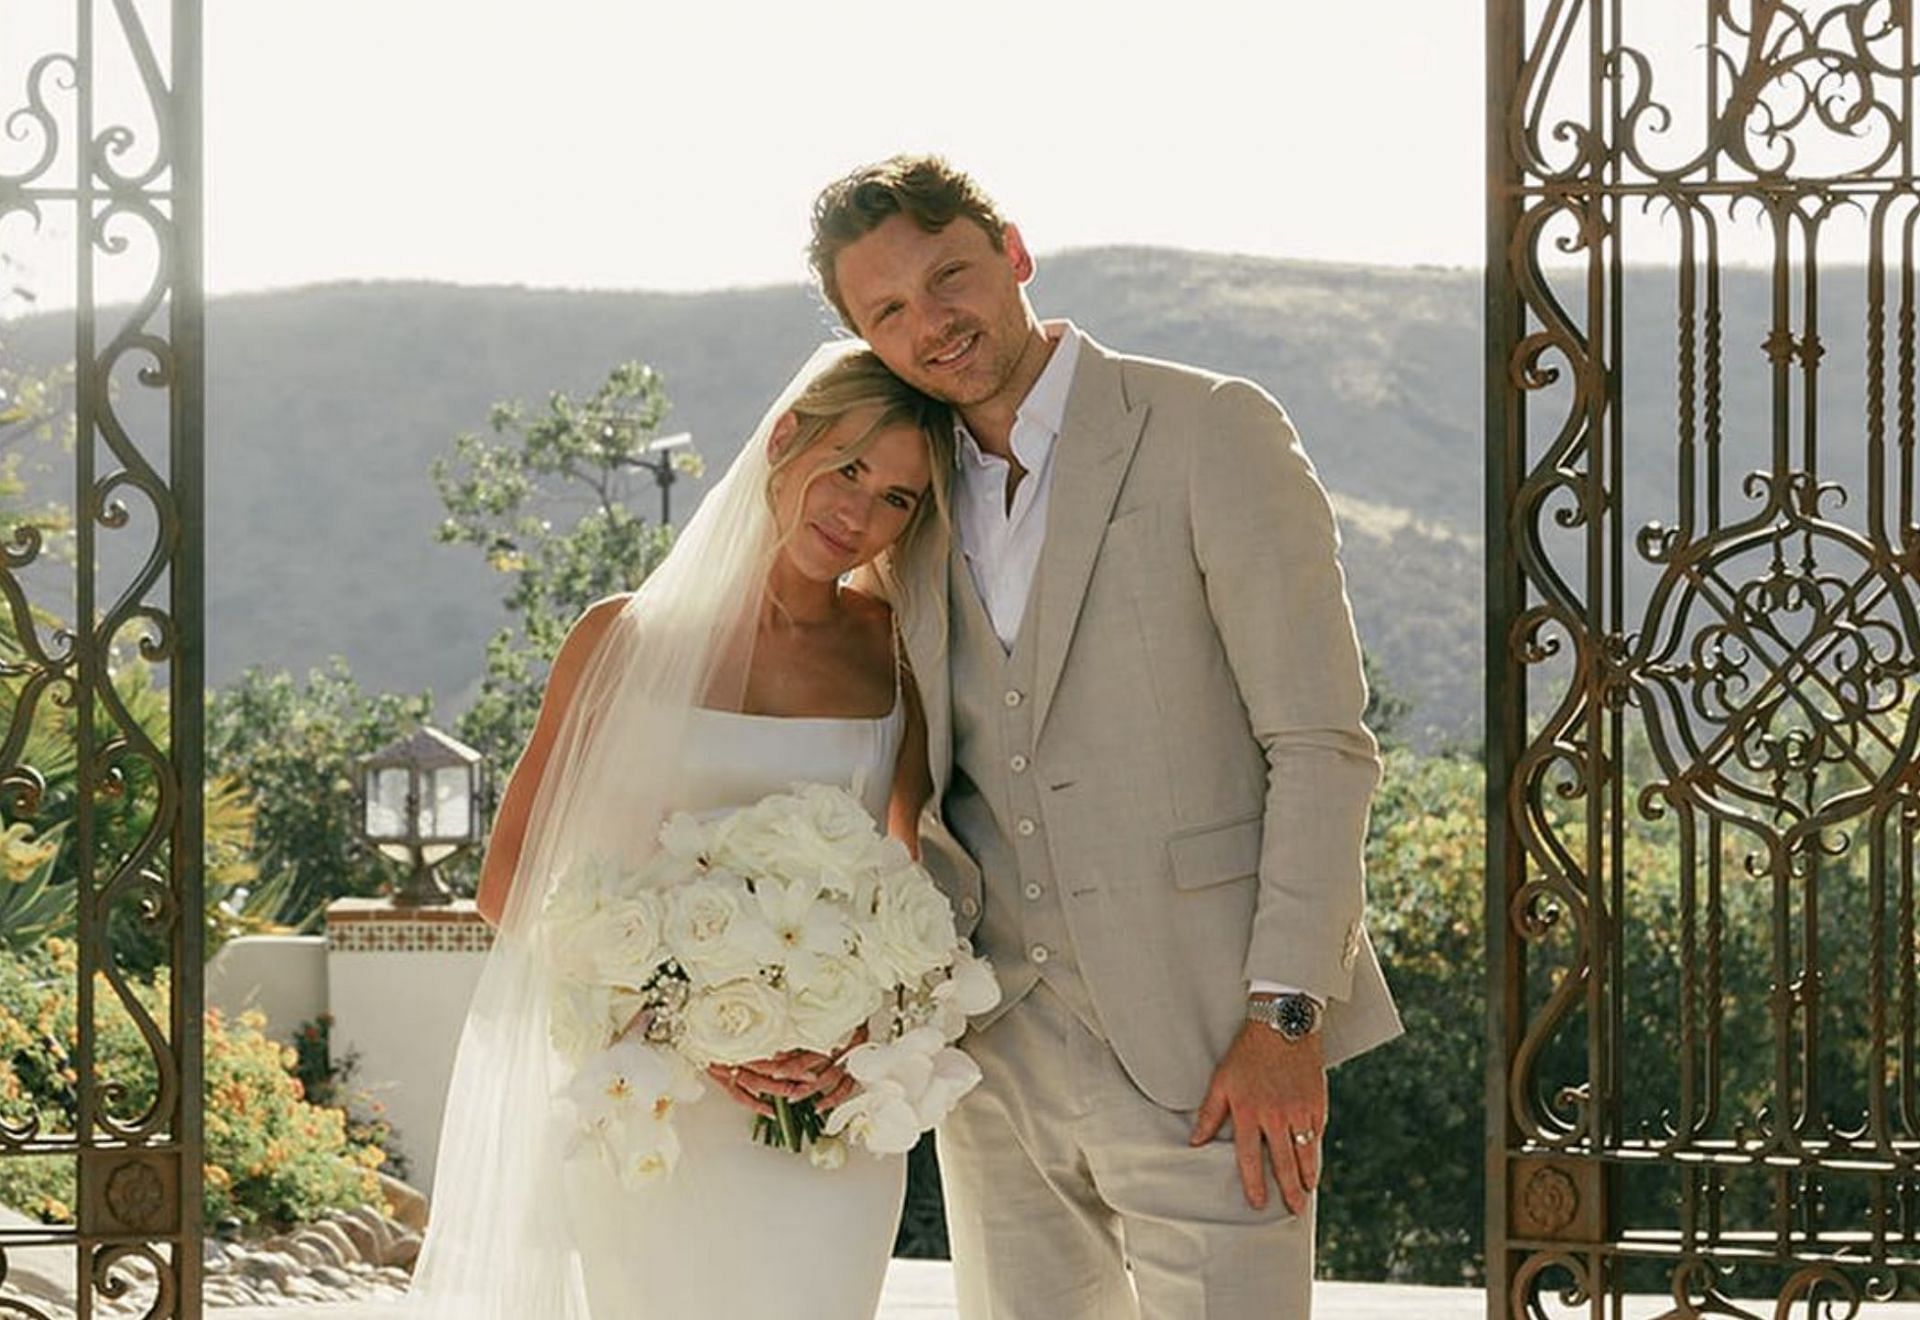 Sam Reinhart marries girlfriend Jessica Reinhart in mesmerizing SoCal mountain location